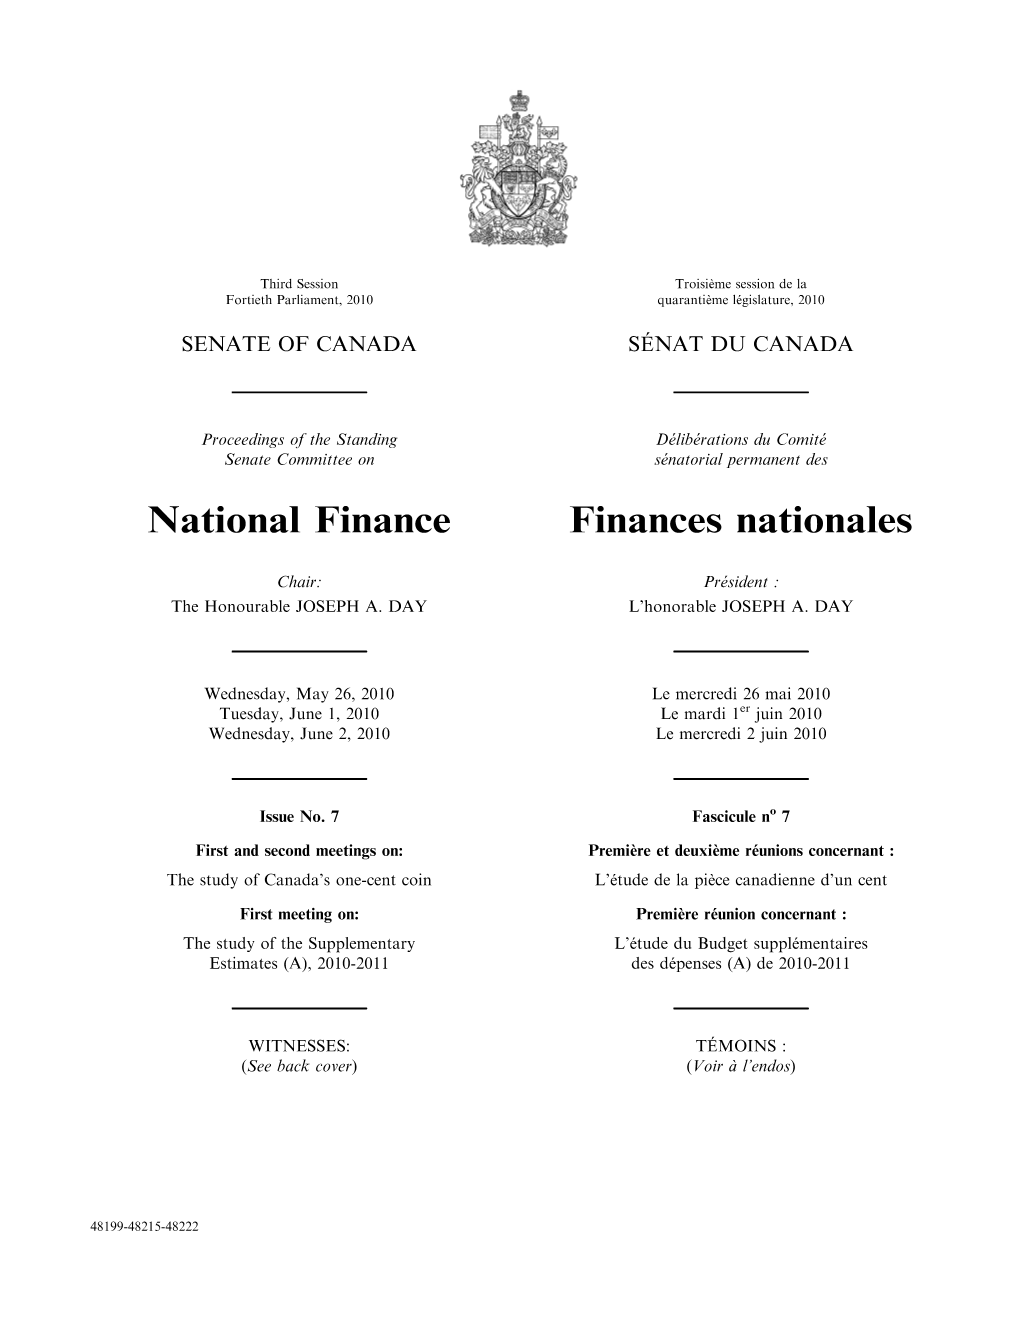 National Finance Finances Nationales